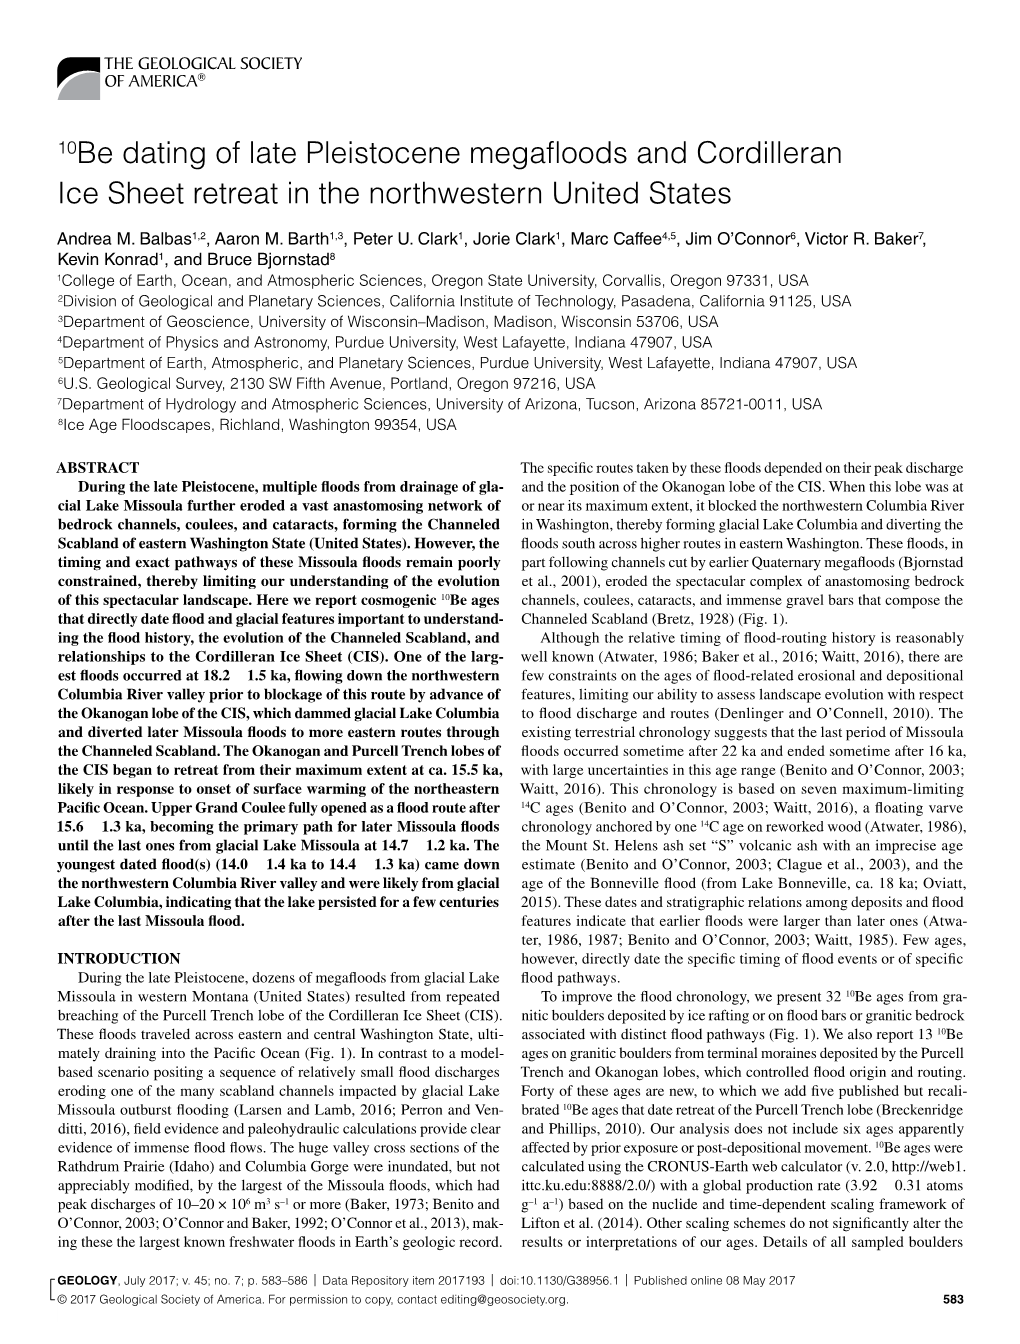 10Be Dating of Late Pleistocene Megafloods and Cordilleran Ice Sheet Retreat in the Northwestern United States